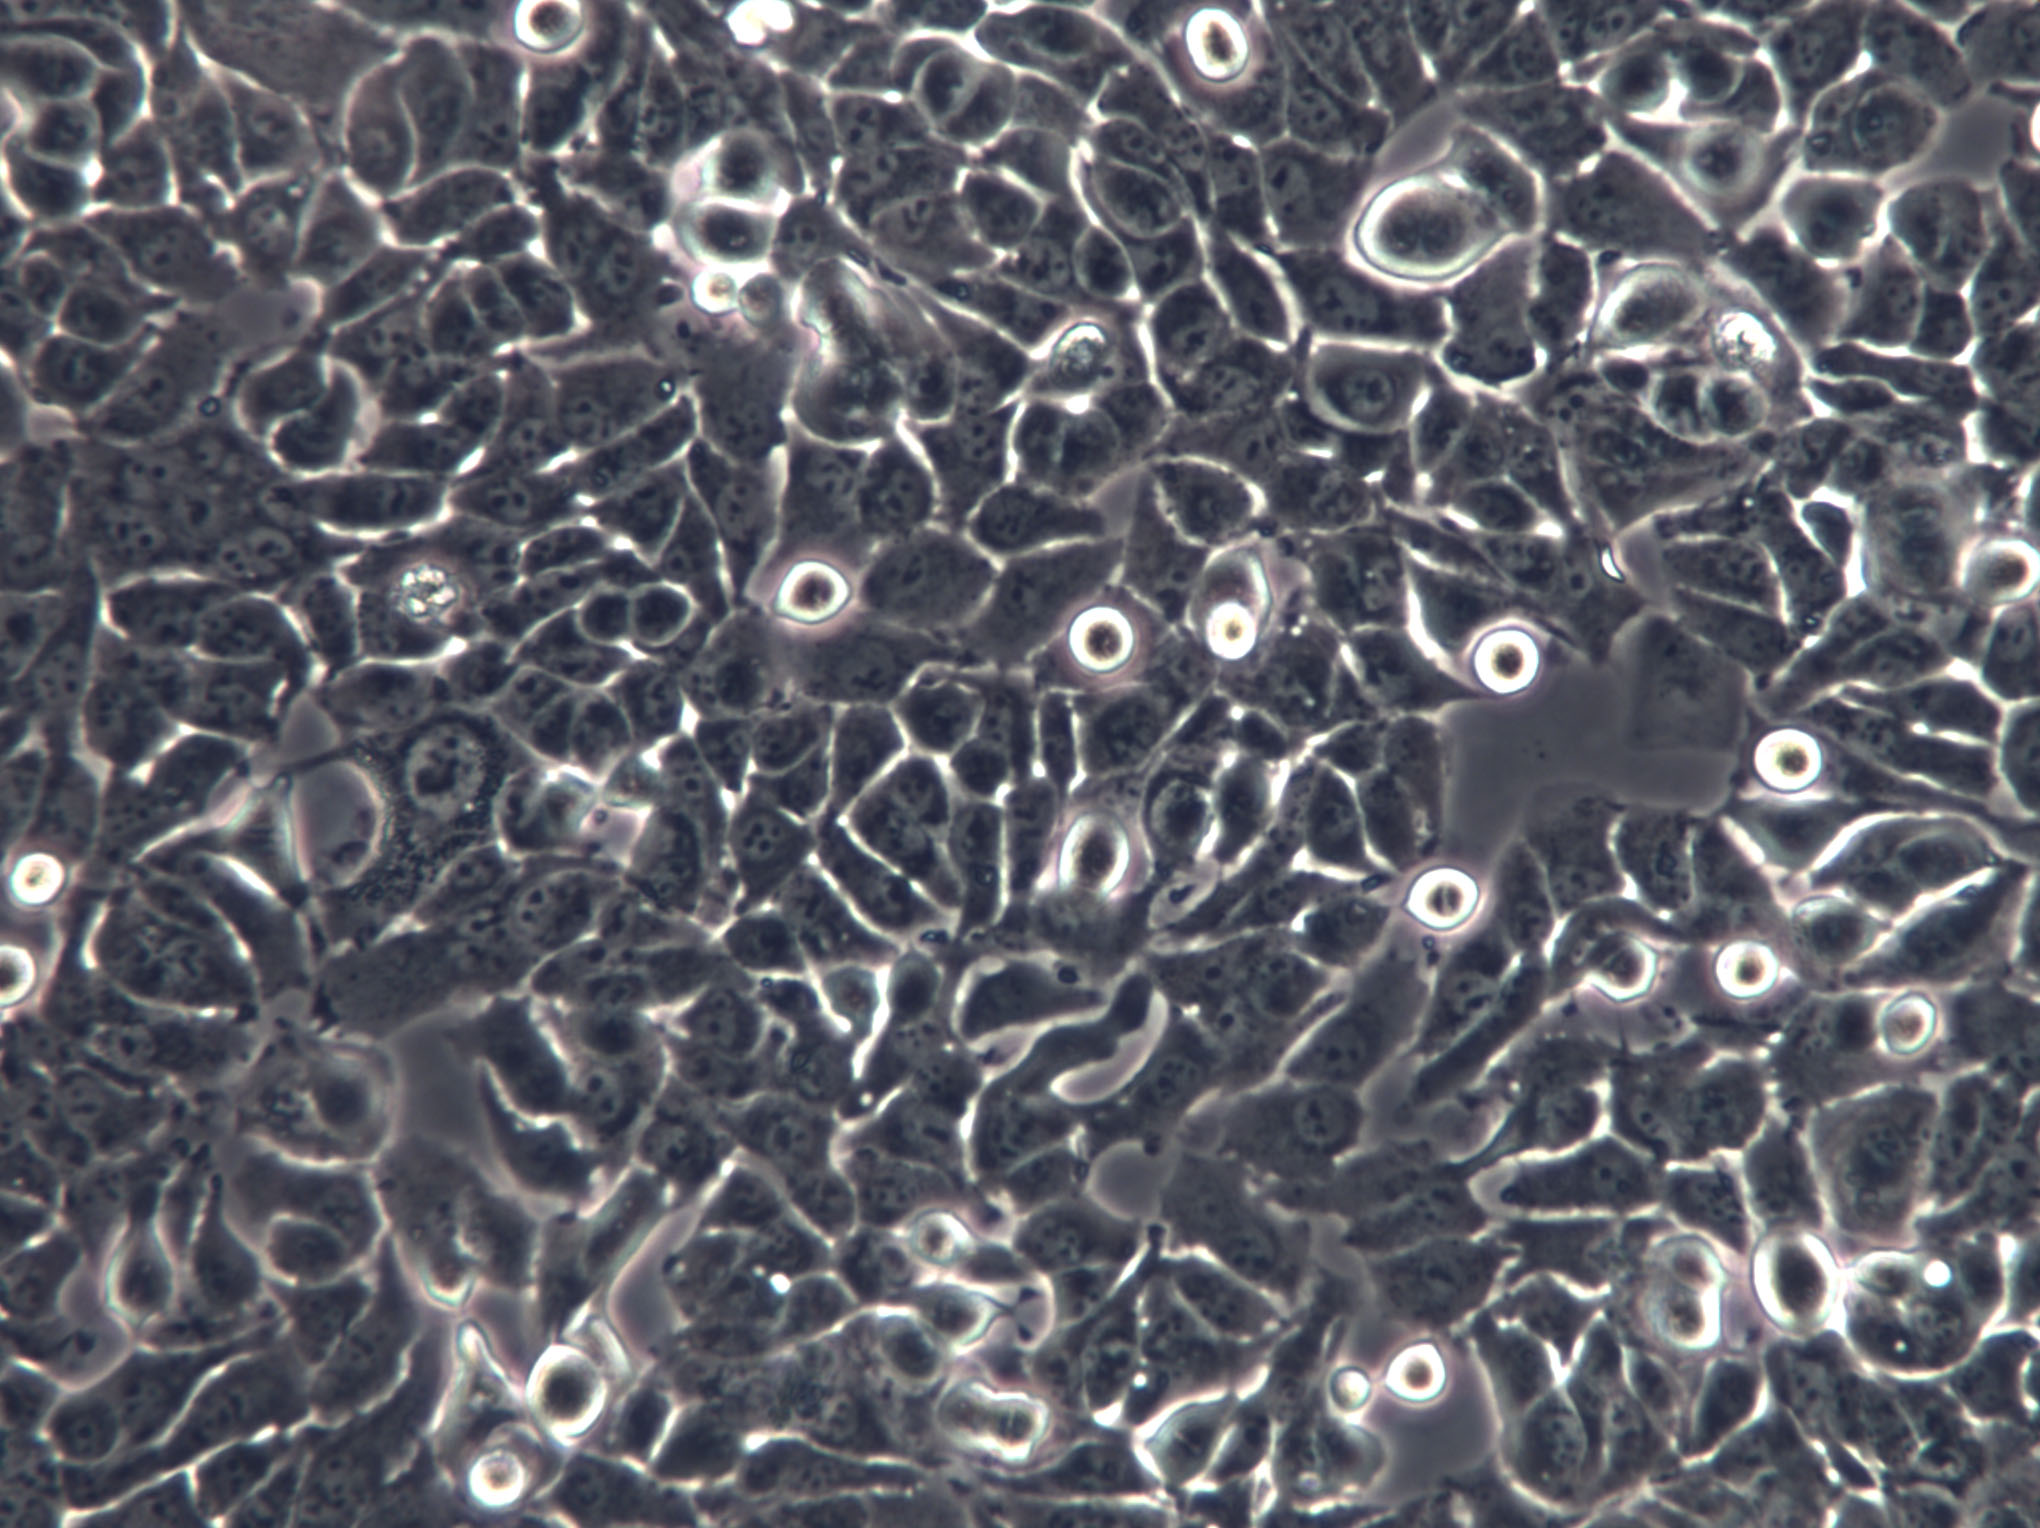 FRhK-4 Cells|恒河猴胚肾克隆细胞,FRhK-4 Cells